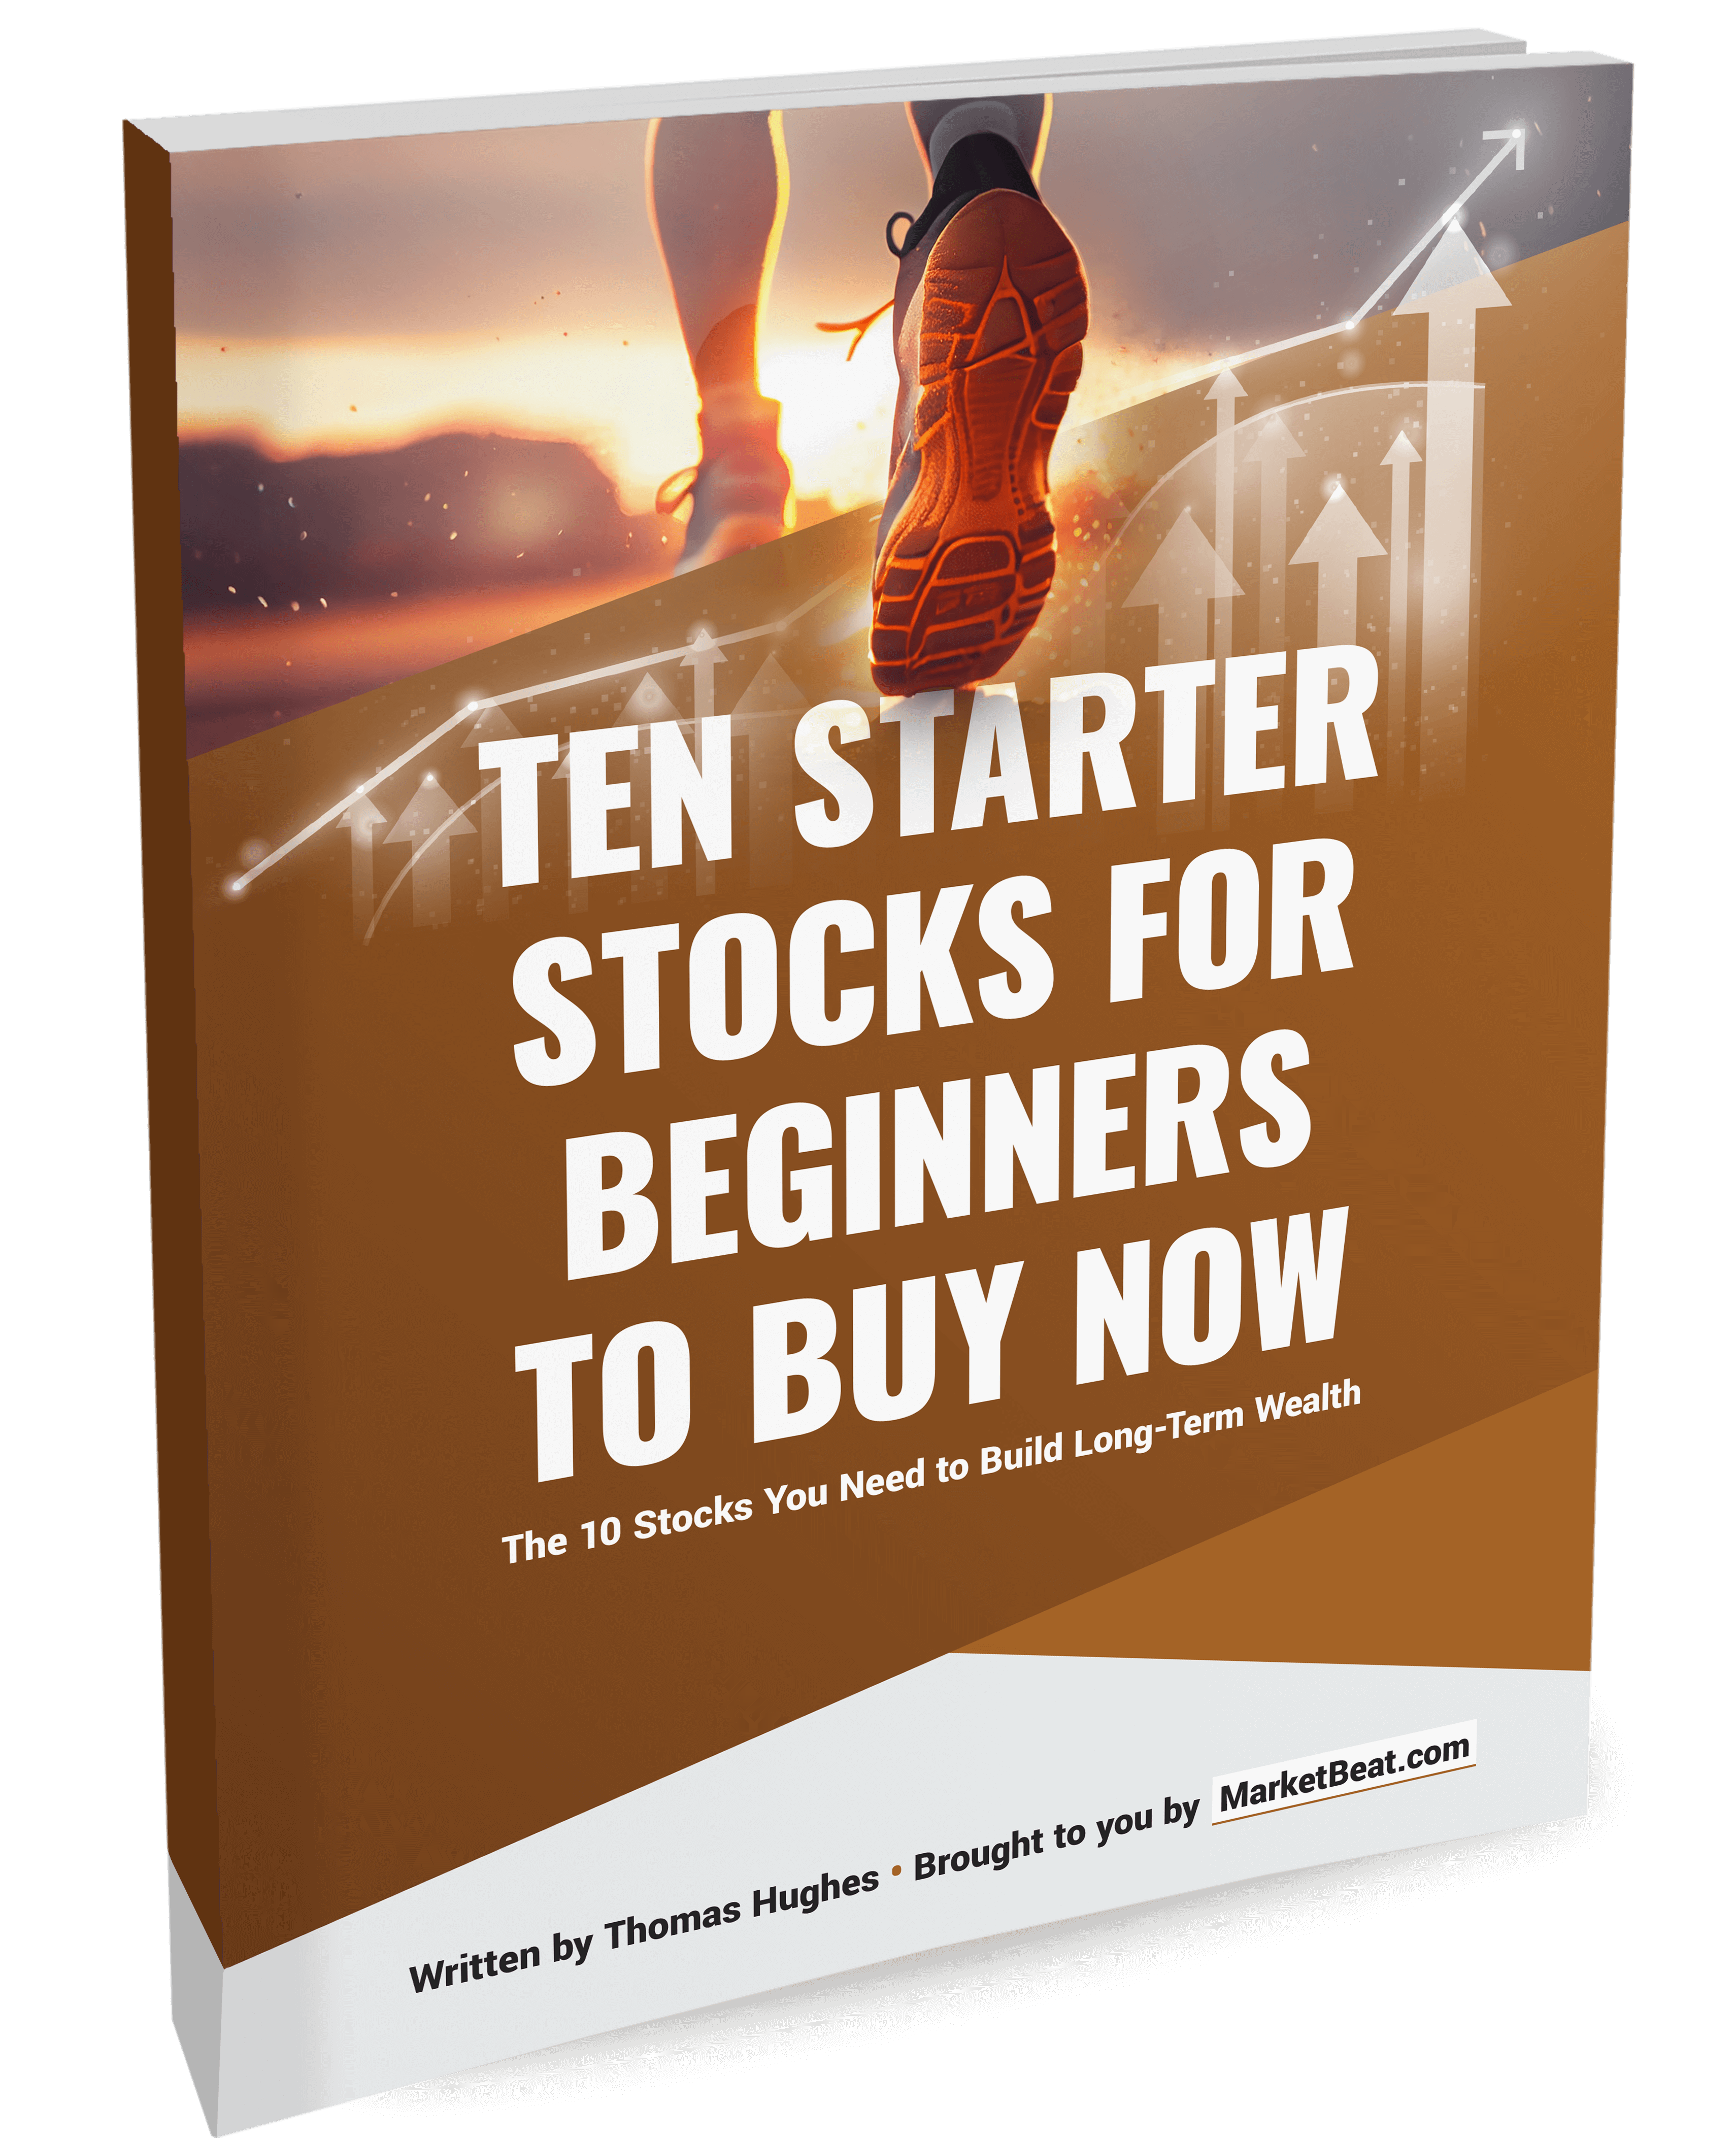 Ten starter stocks that newbies can buy now